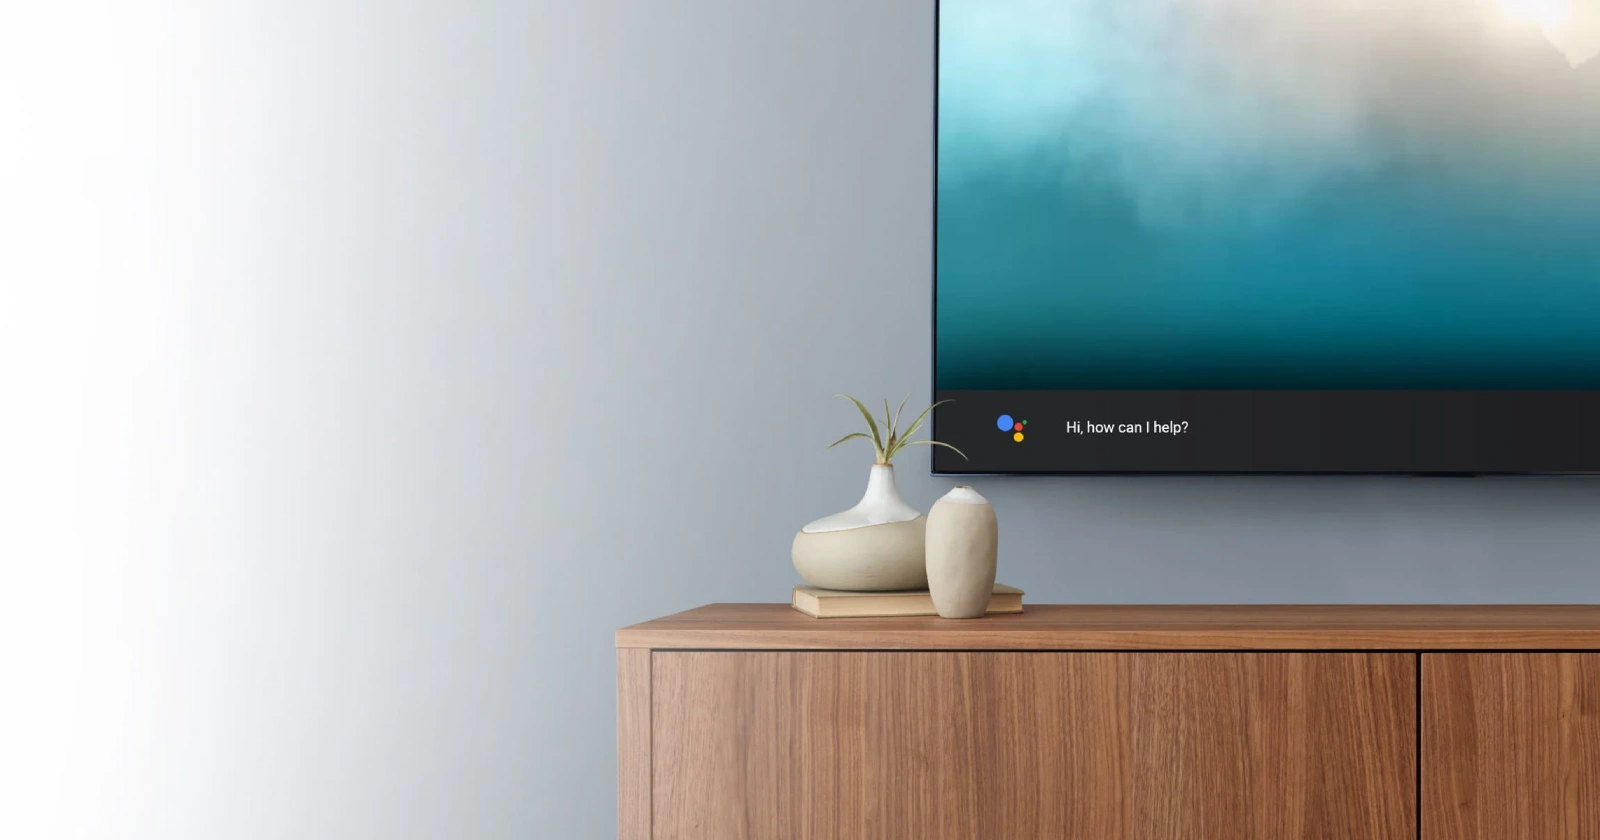 PSA: Built-in Google Assistant no longer supported on Samsung smart TVs